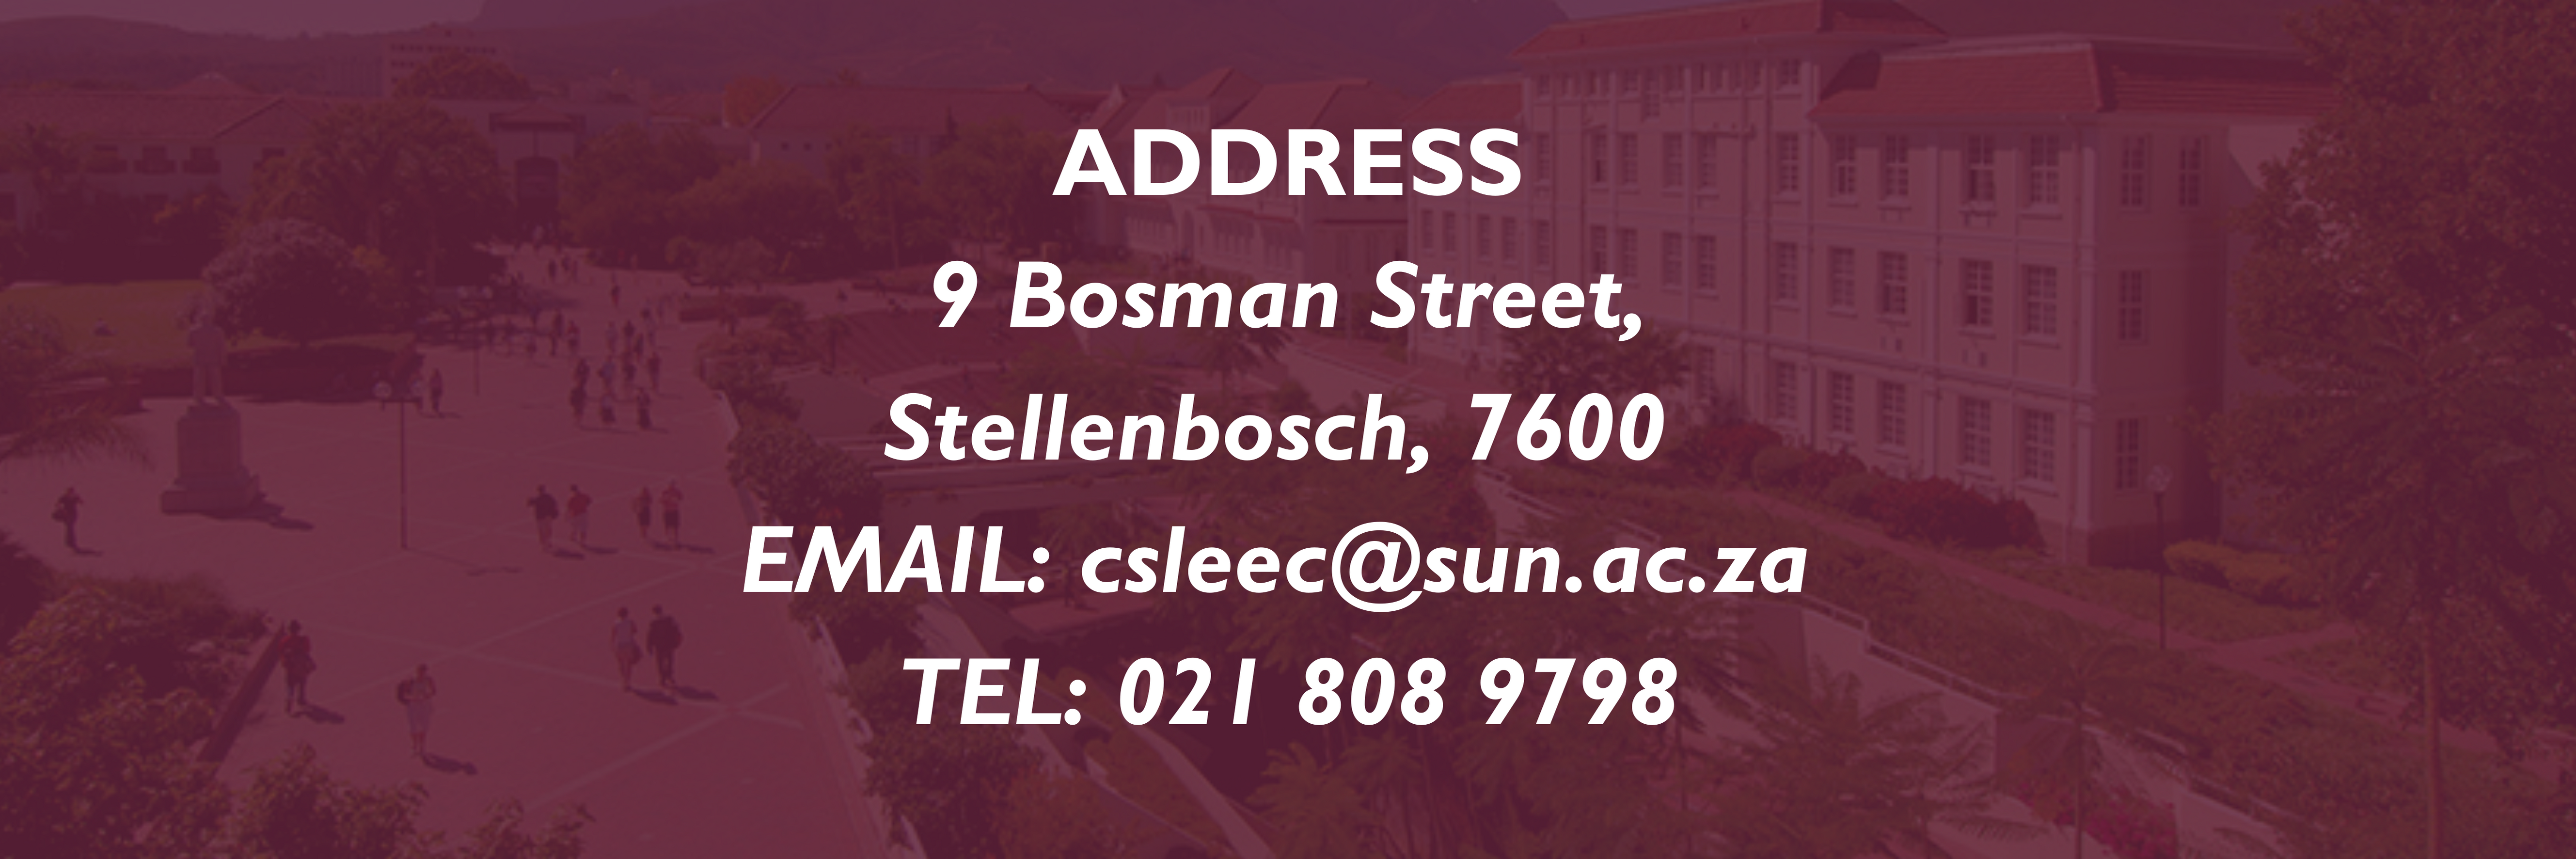 CSLEEC Address.png